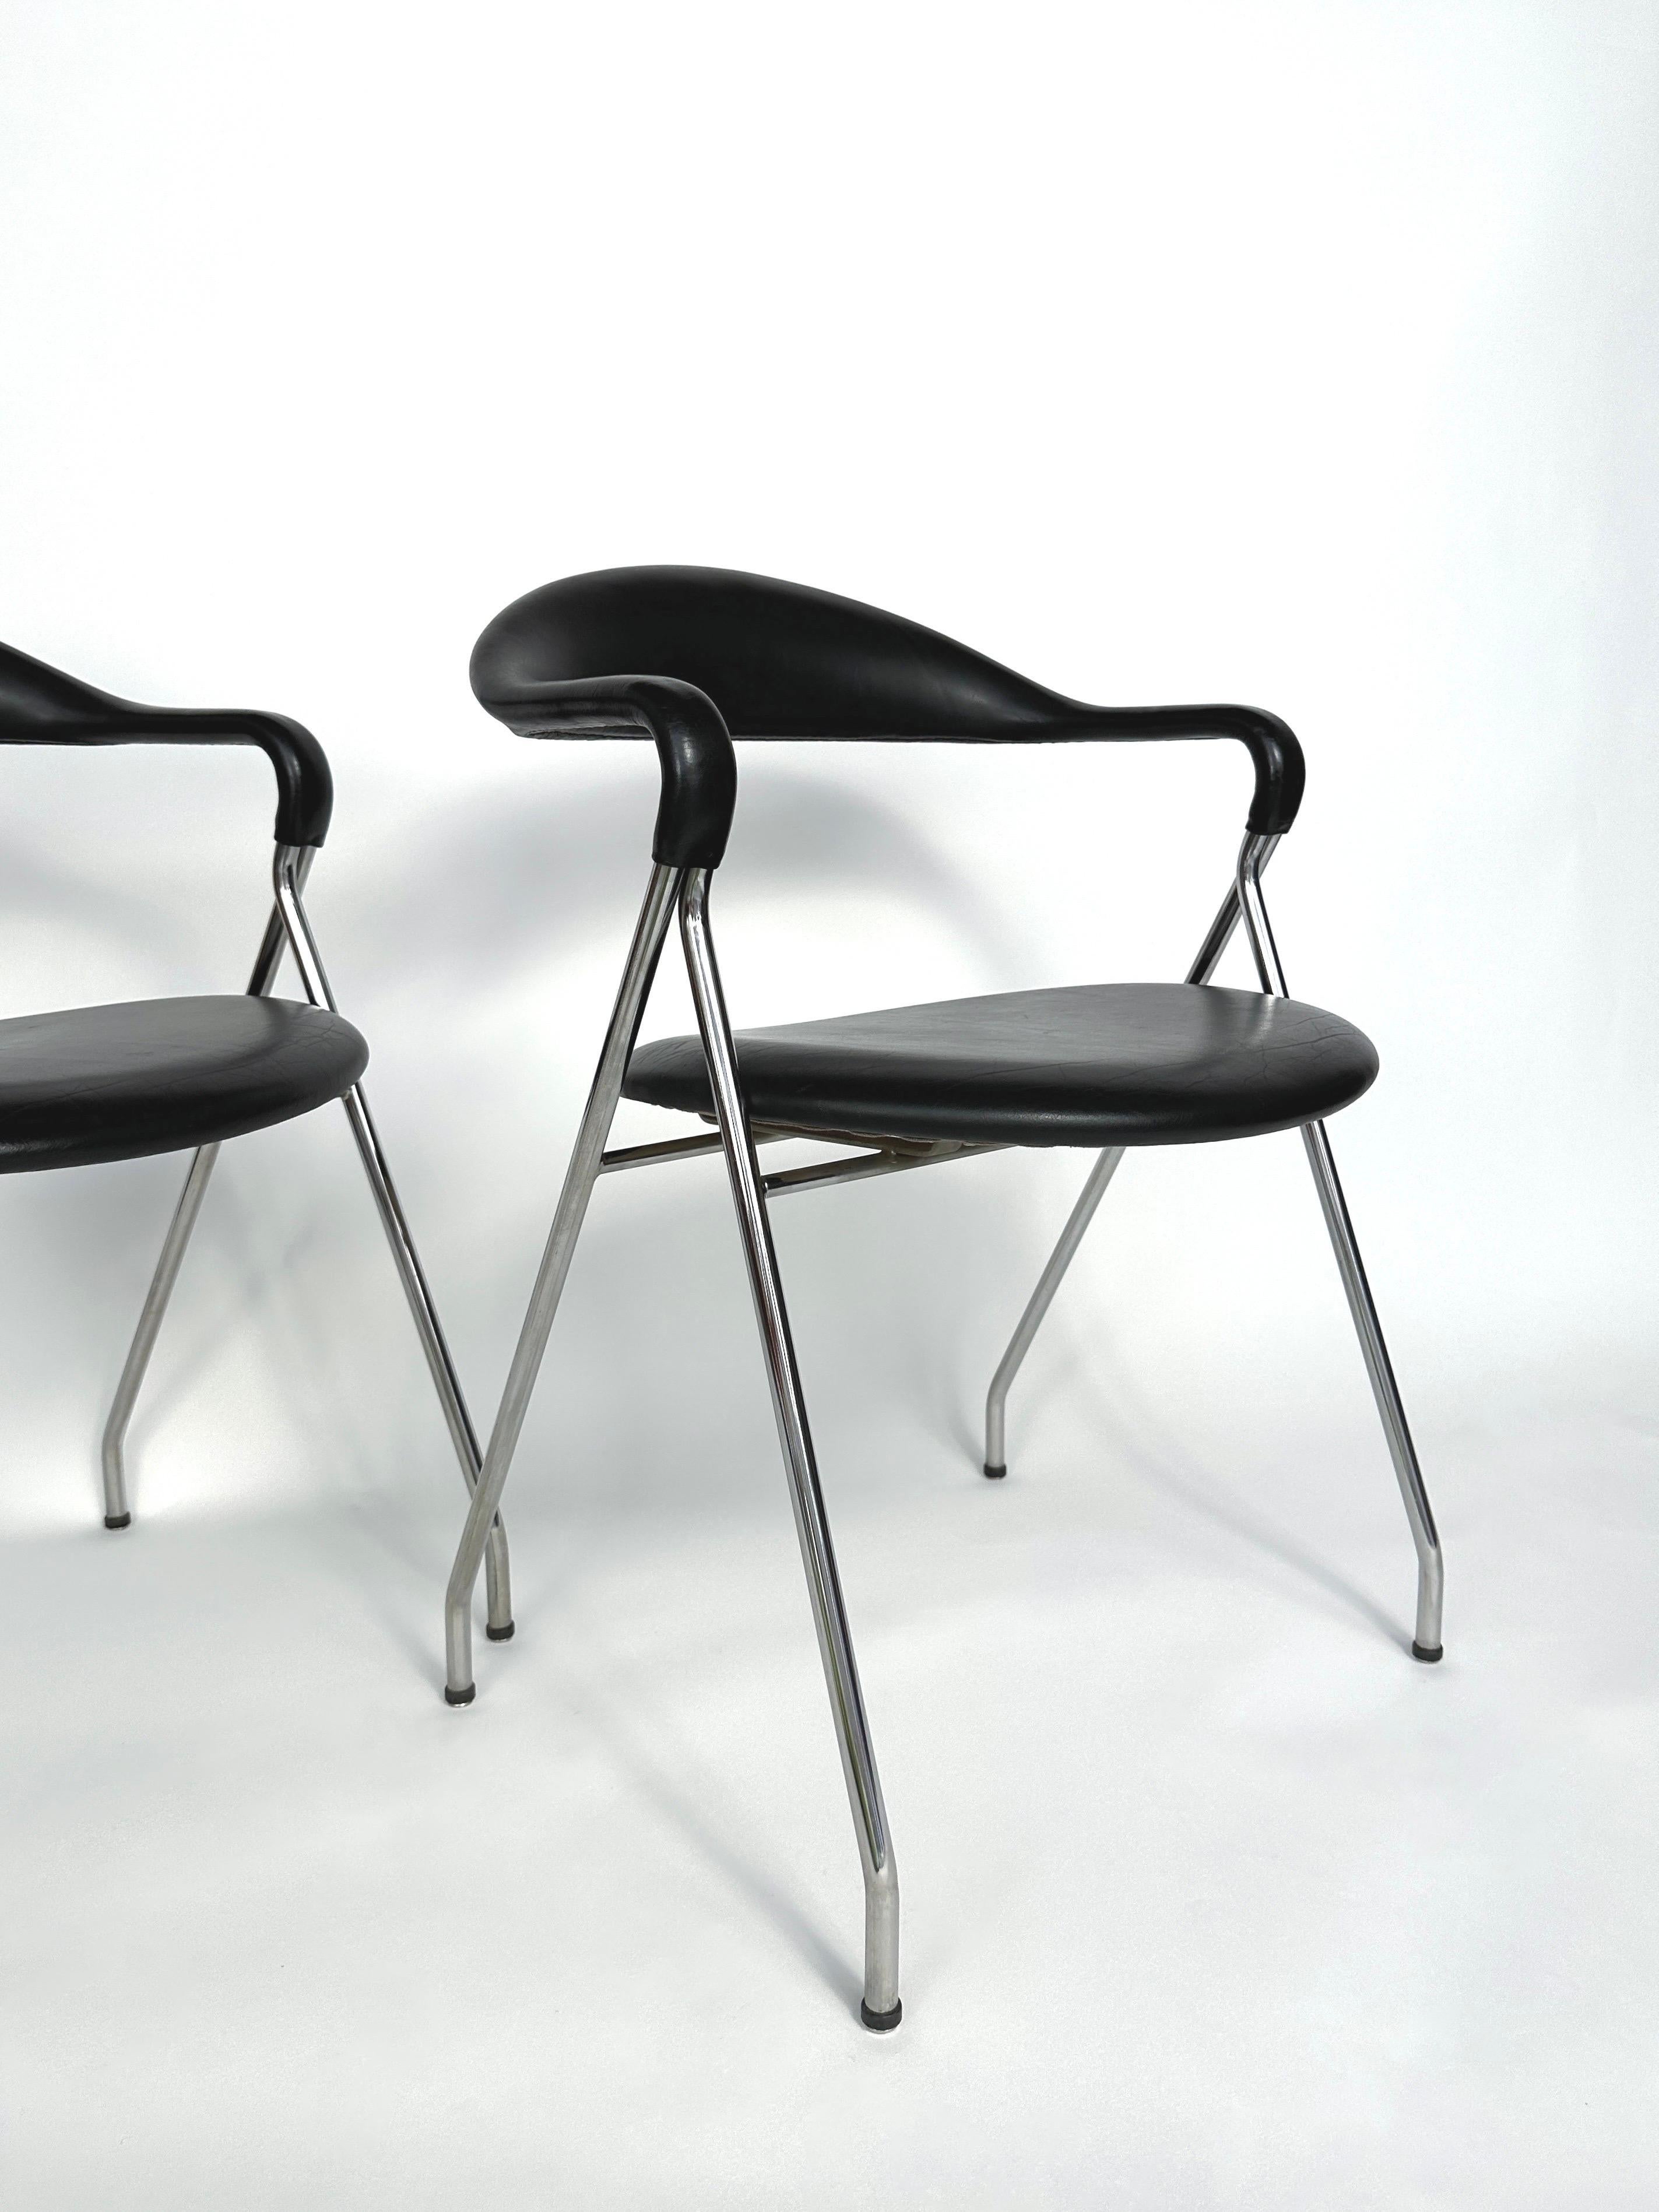 Late 20th Century Pair of Hans Eichenberger Saffa Chairs Black Leather Dietiker Switzerland 1970s For Sale